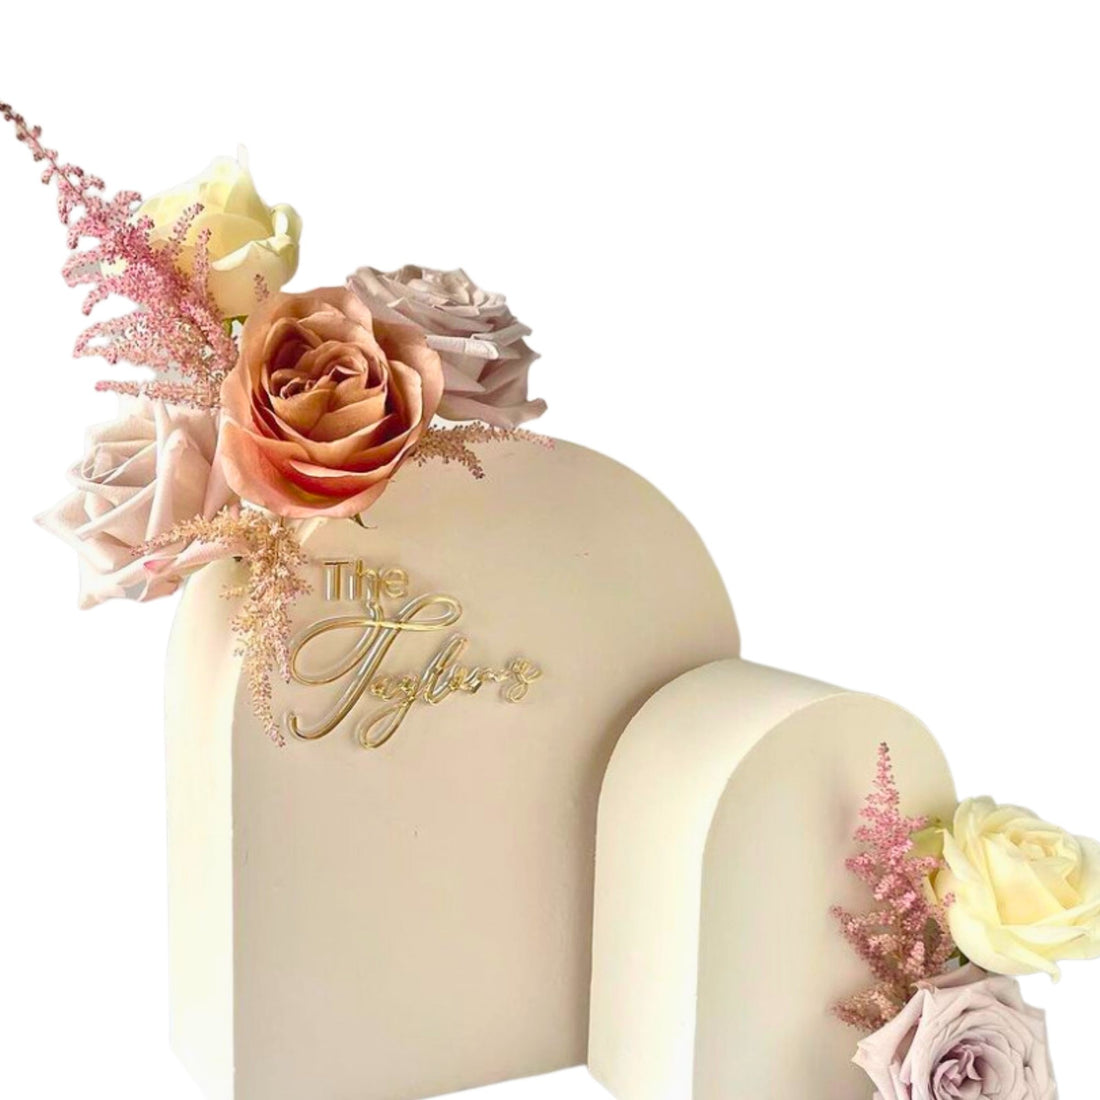 Surname Wedding Cake Charm - Cake Topper Warehouse